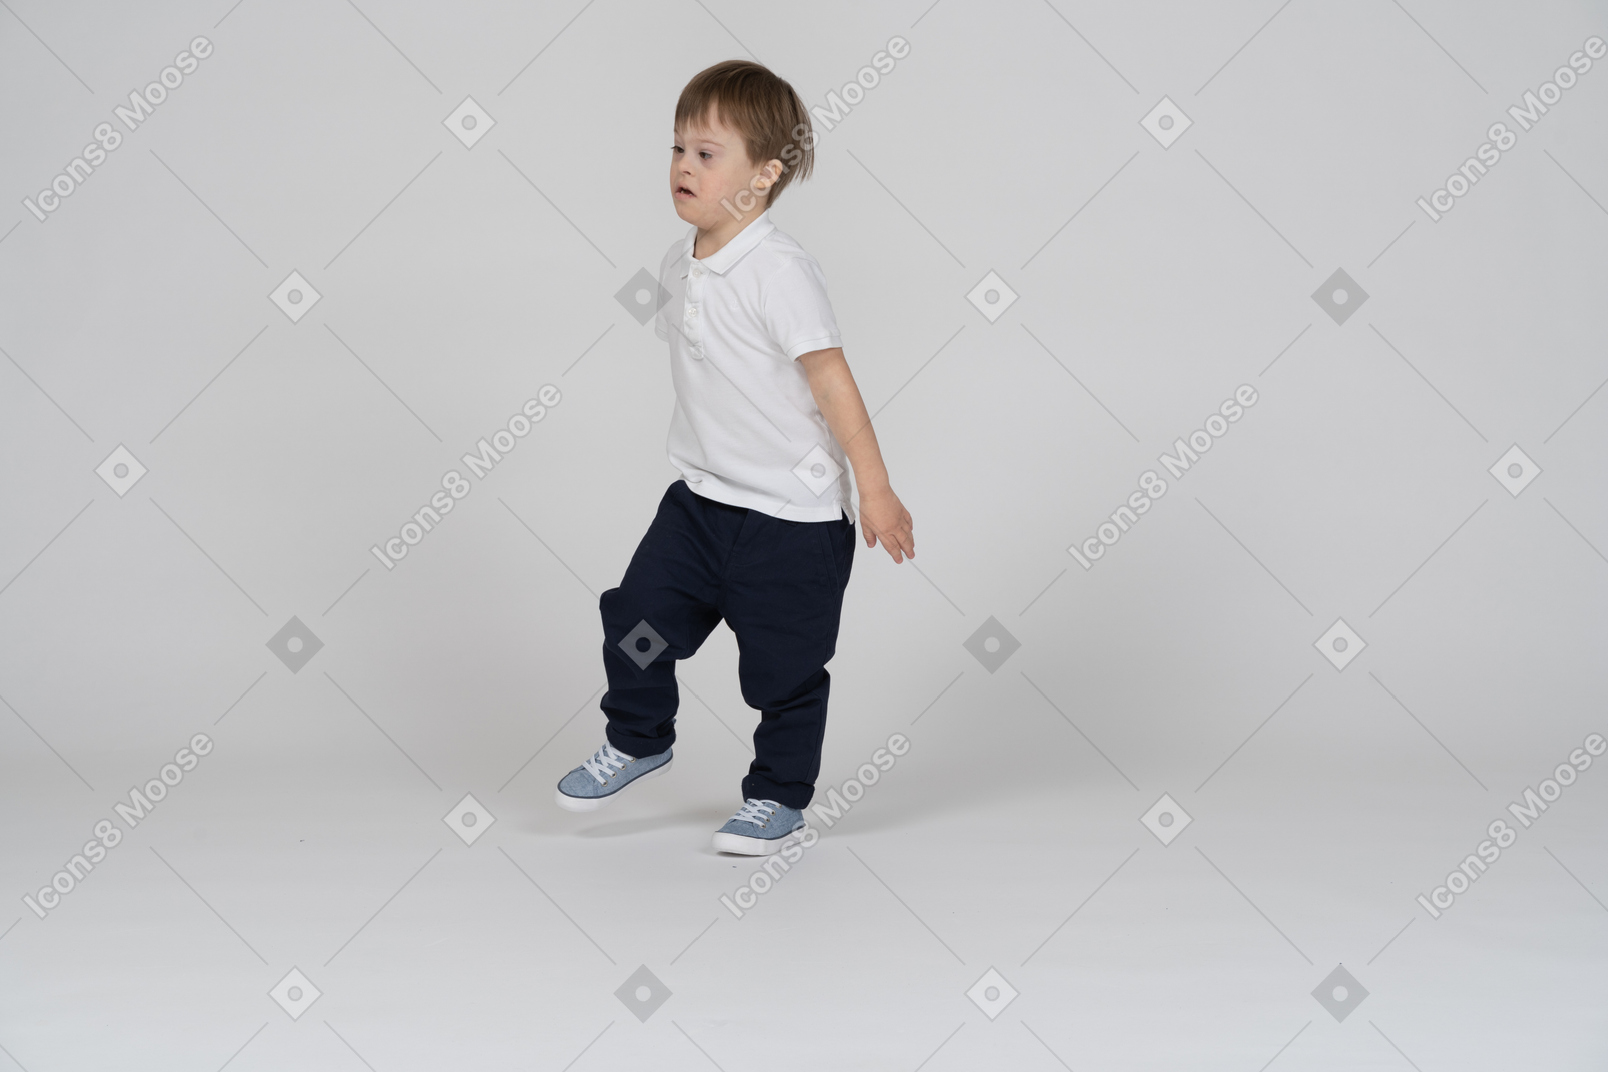 Three-quarter view of a boy stepping forward